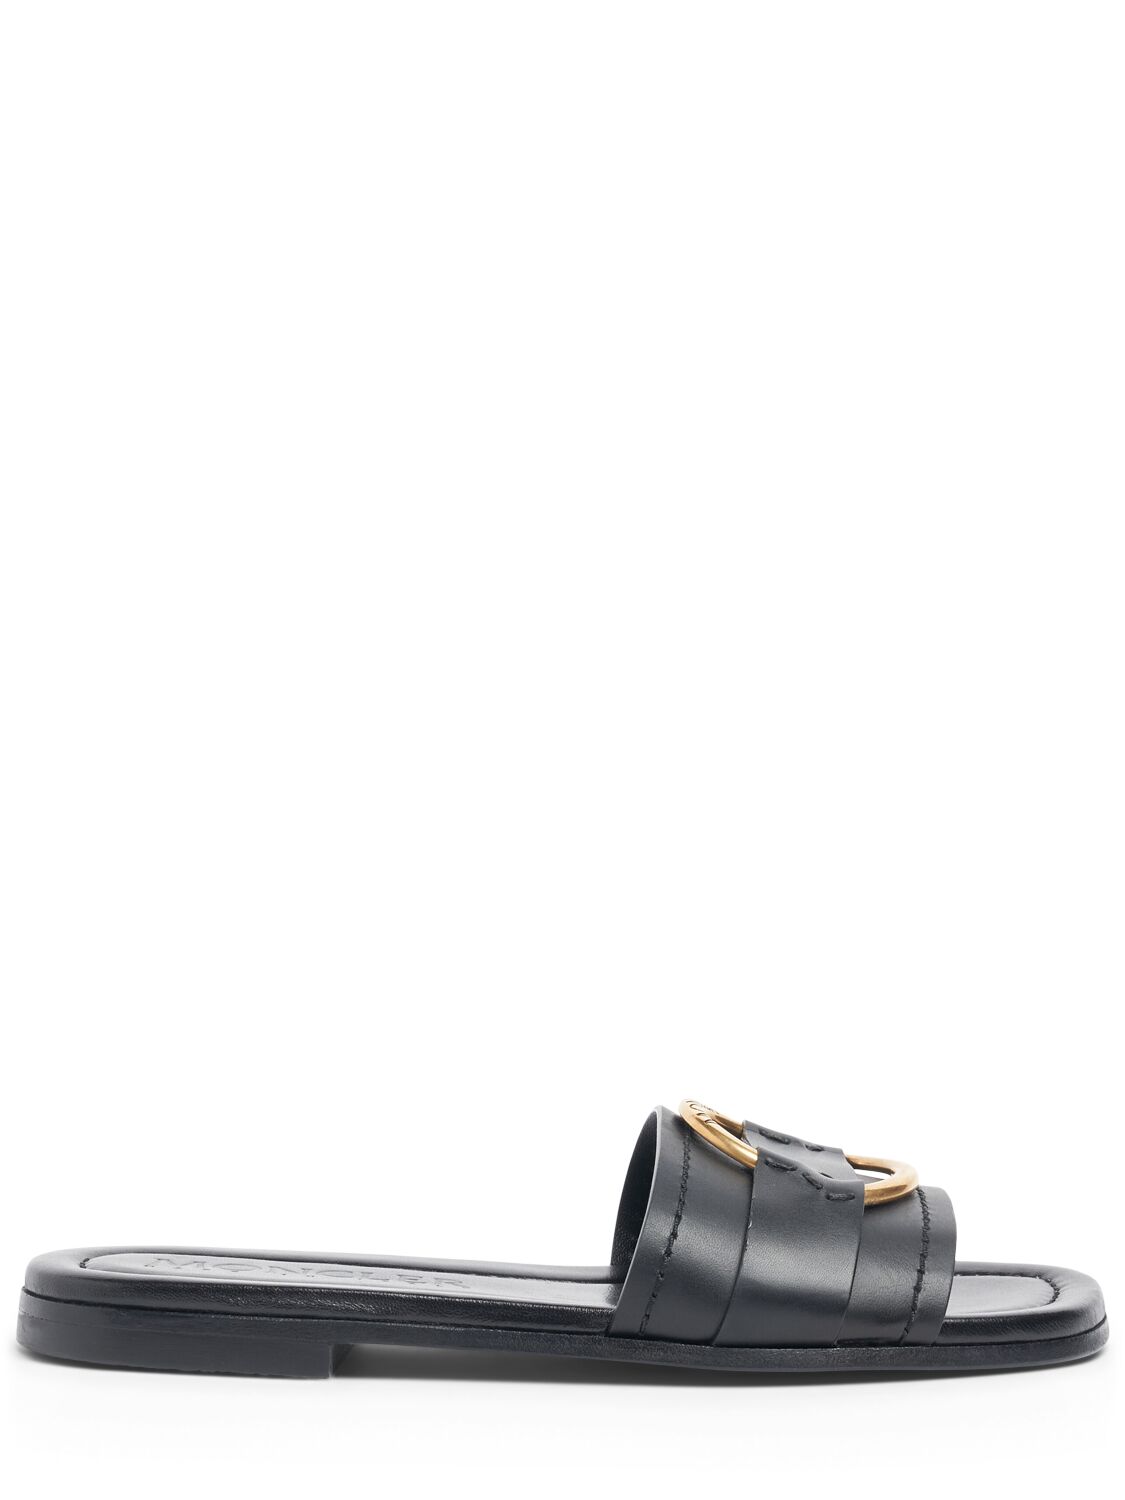 Image of 15mm Bell Leather Slide Sandals